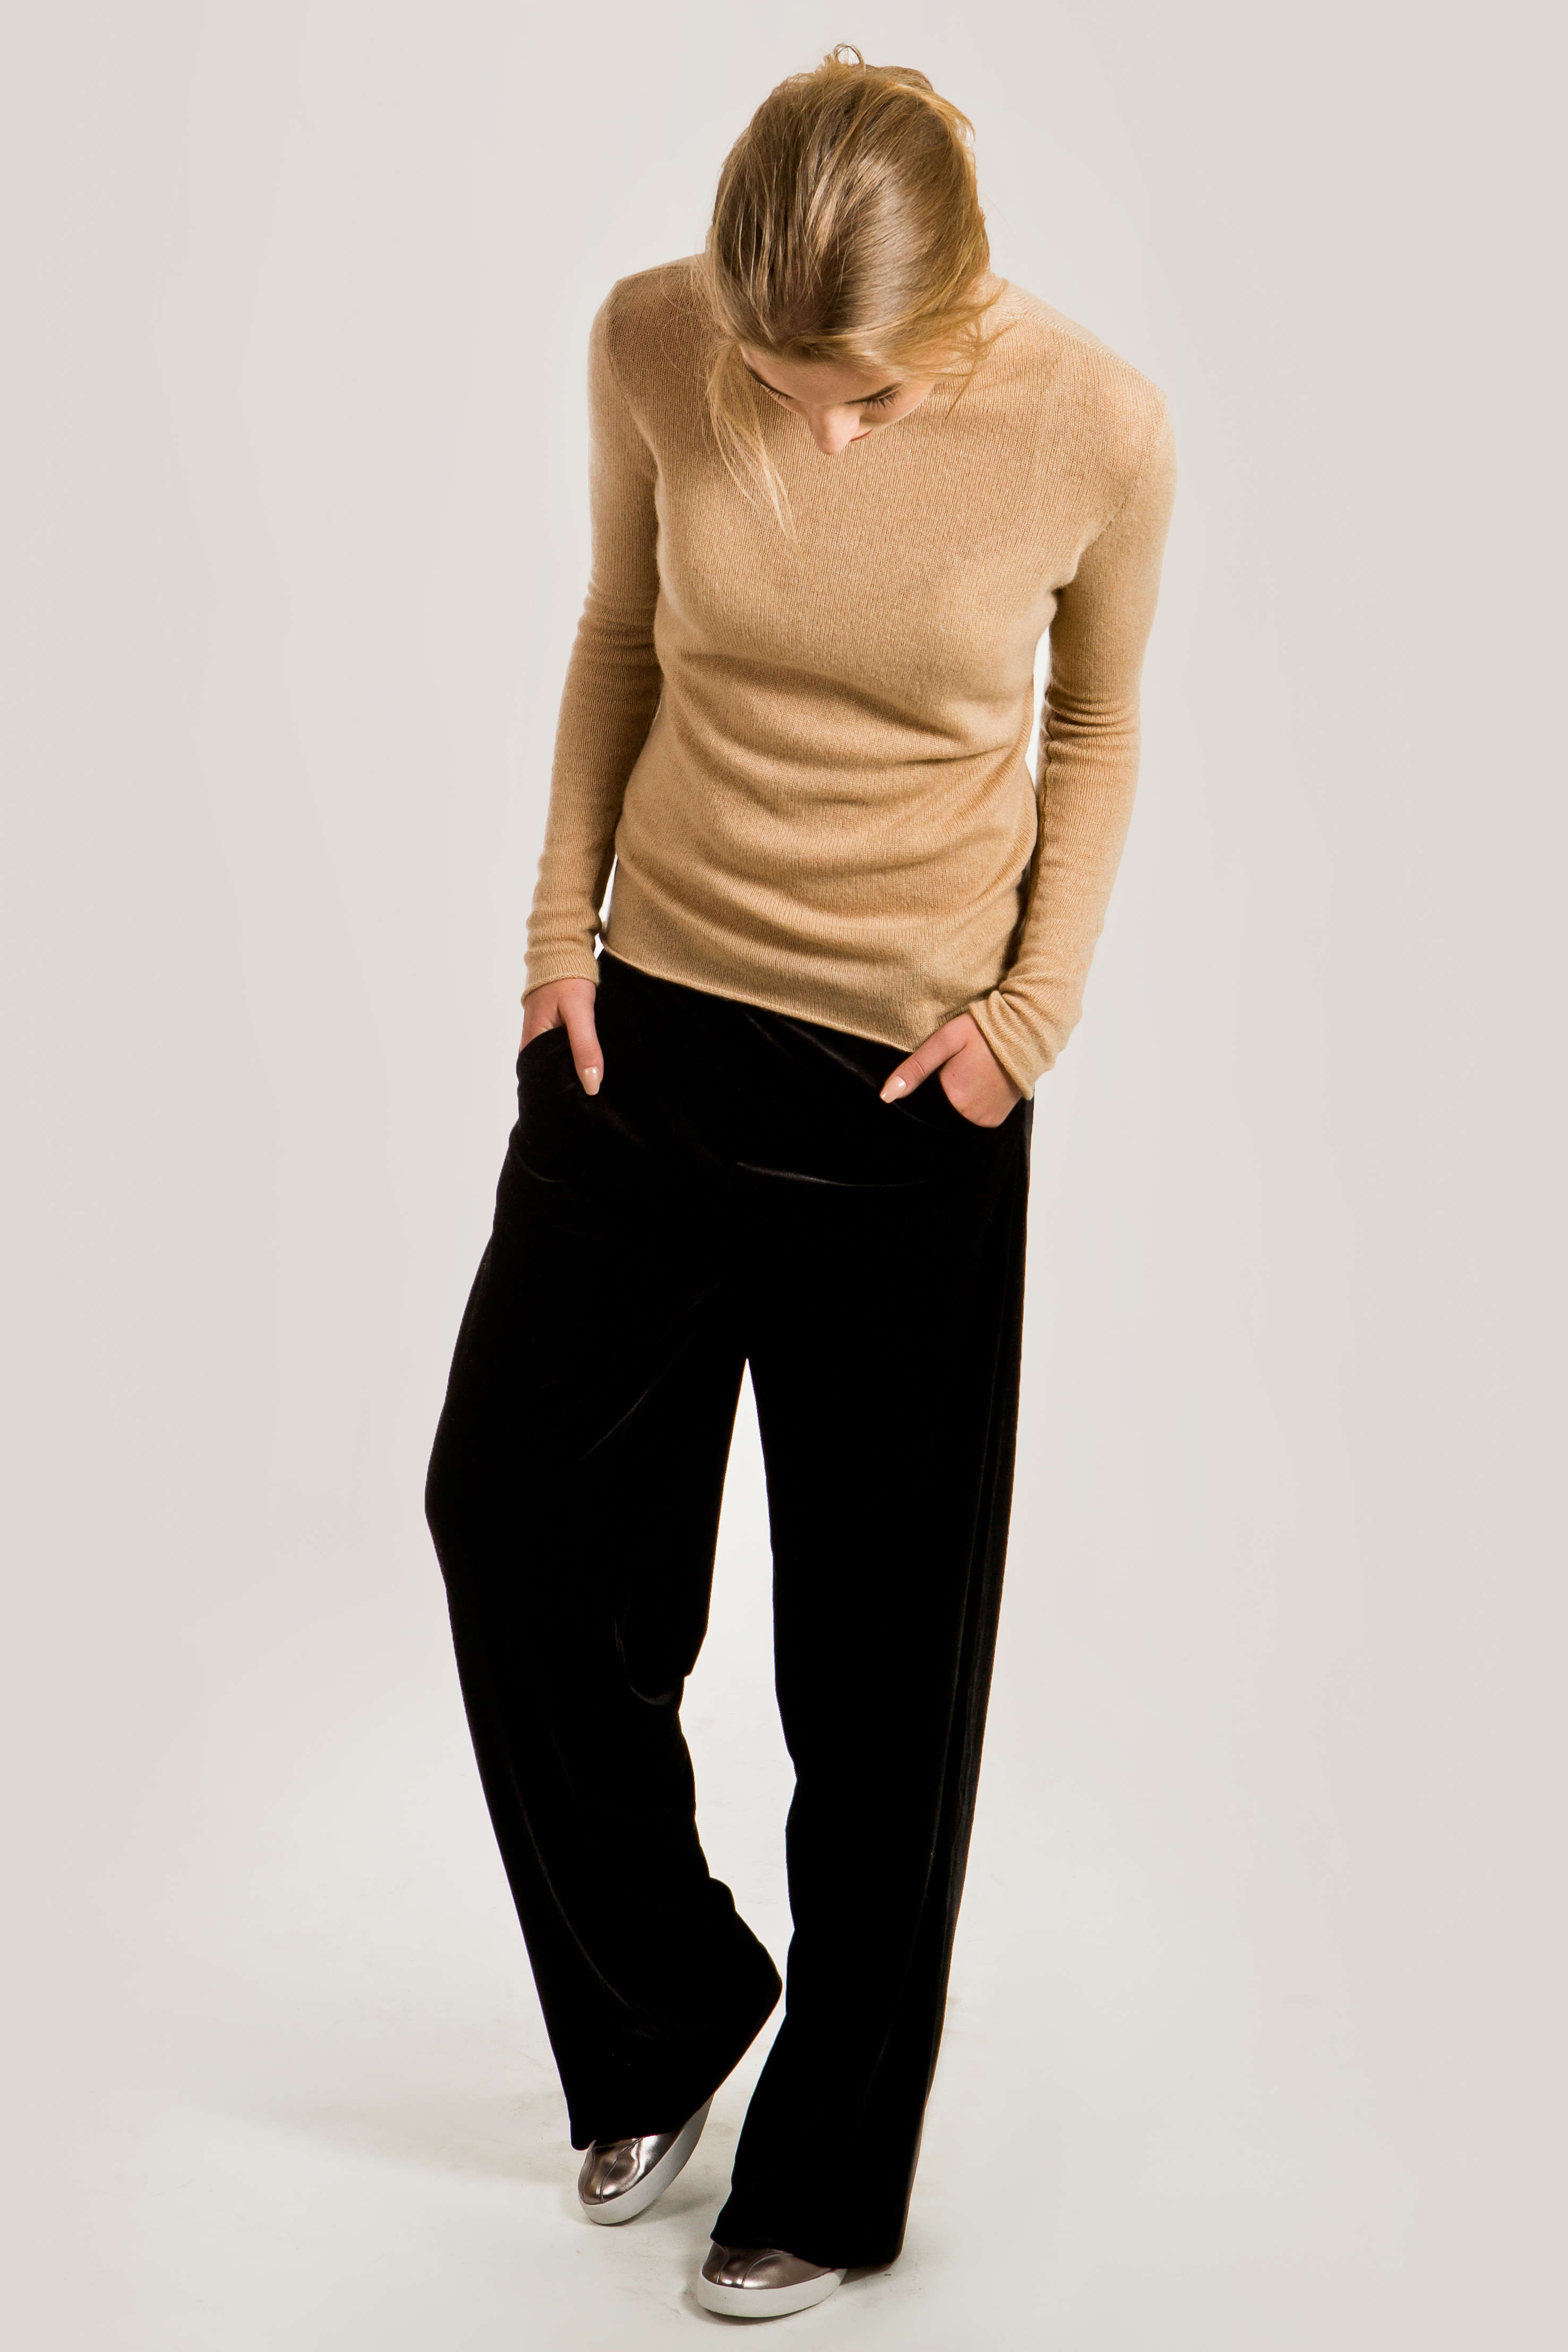 Women's camel cashmere turtleneck sweater MARGO